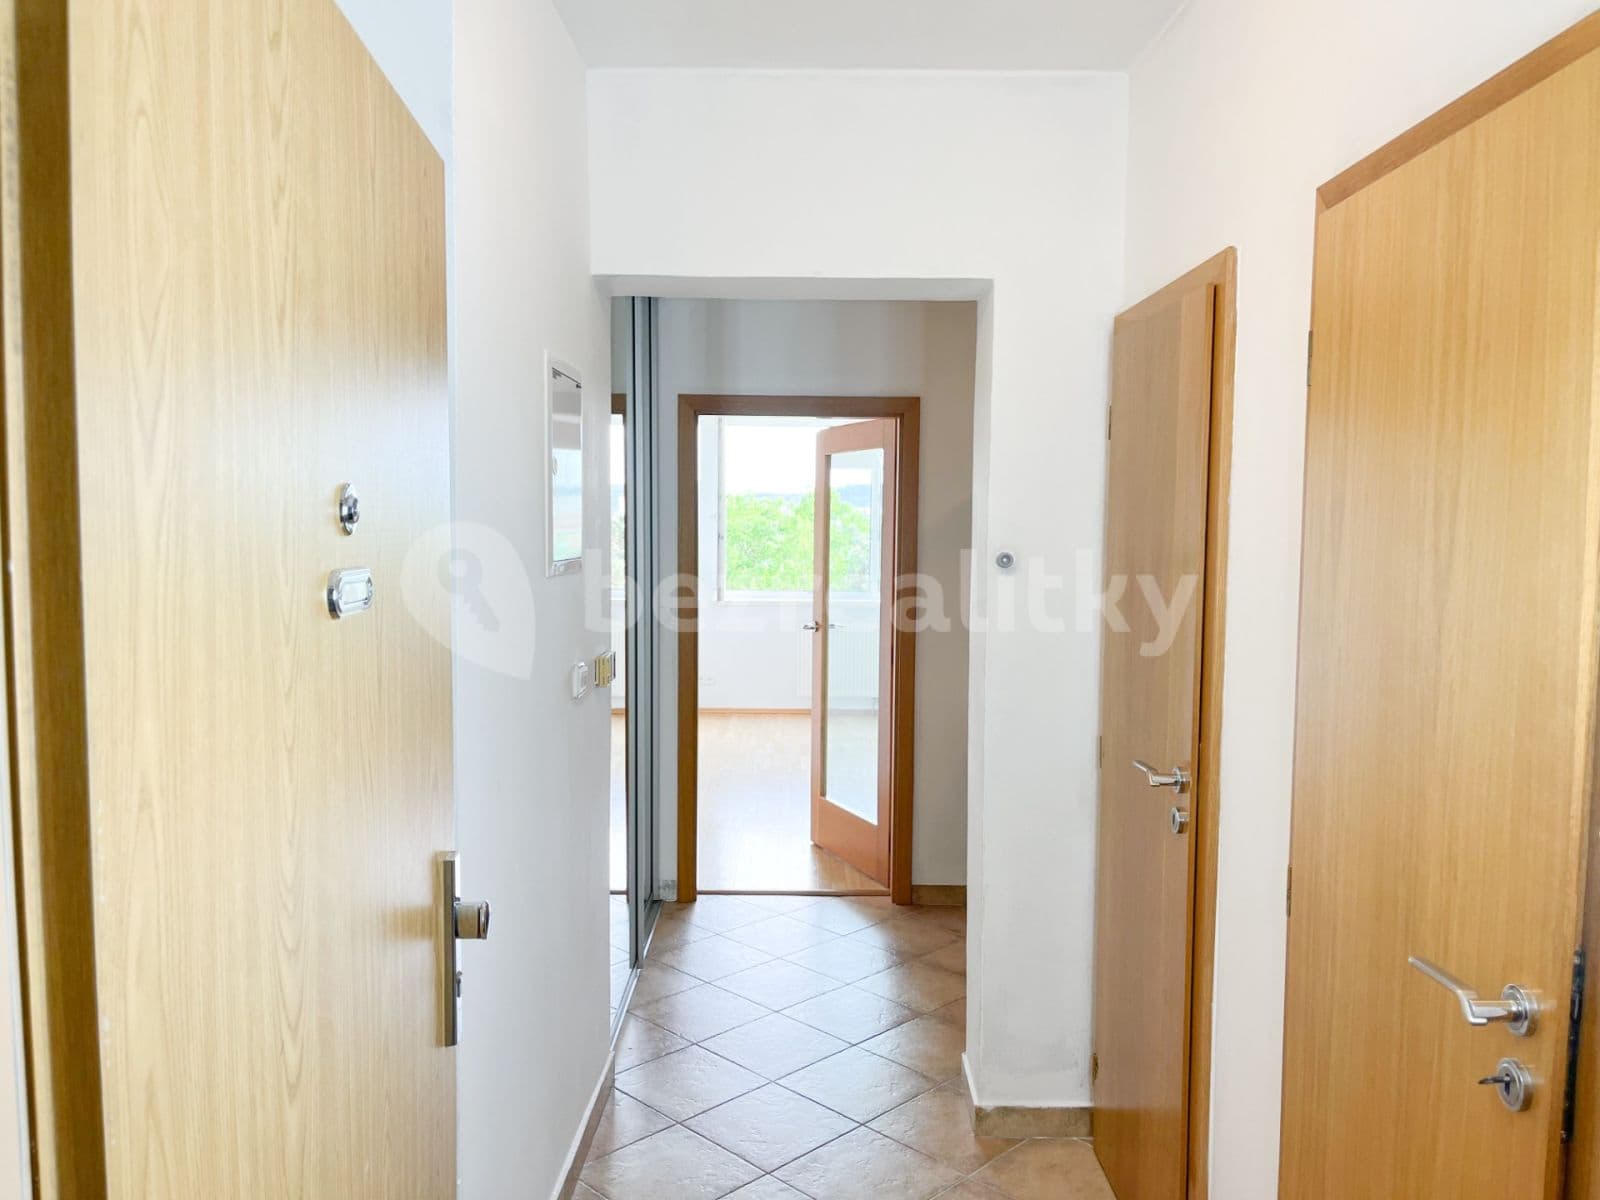 1 bedroom with open-plan kitchen flat for sale, 44 m², Mráčkova, Prague, Prague